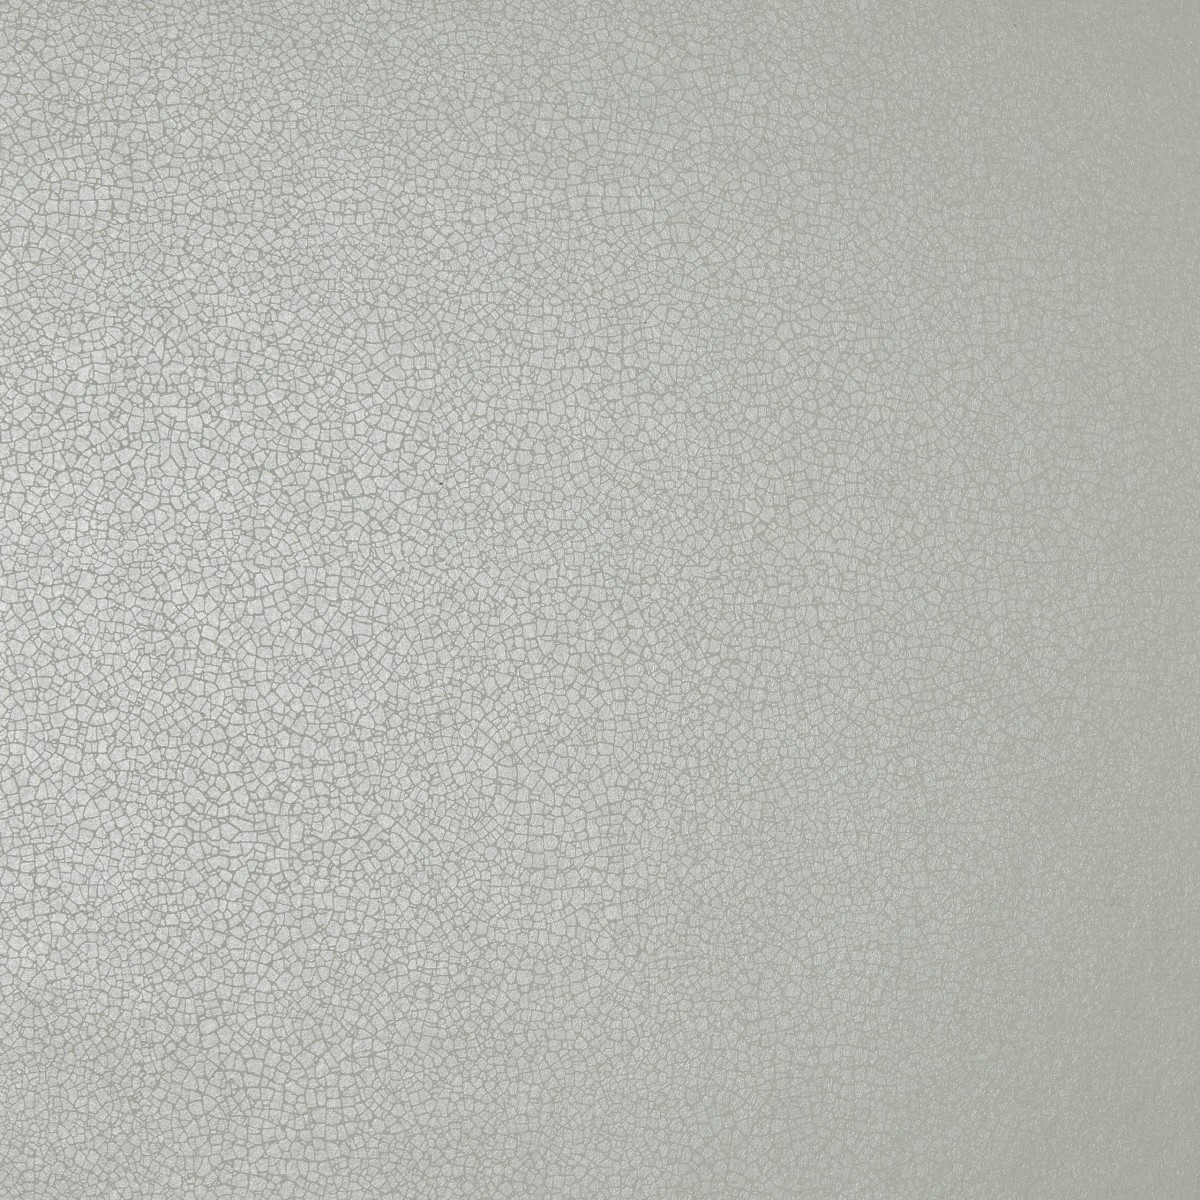 Tapet Emile, Ivory Cream Luxury Crackle, 1838 Wallcoverings, 5.3mp / rola, Tapet living 